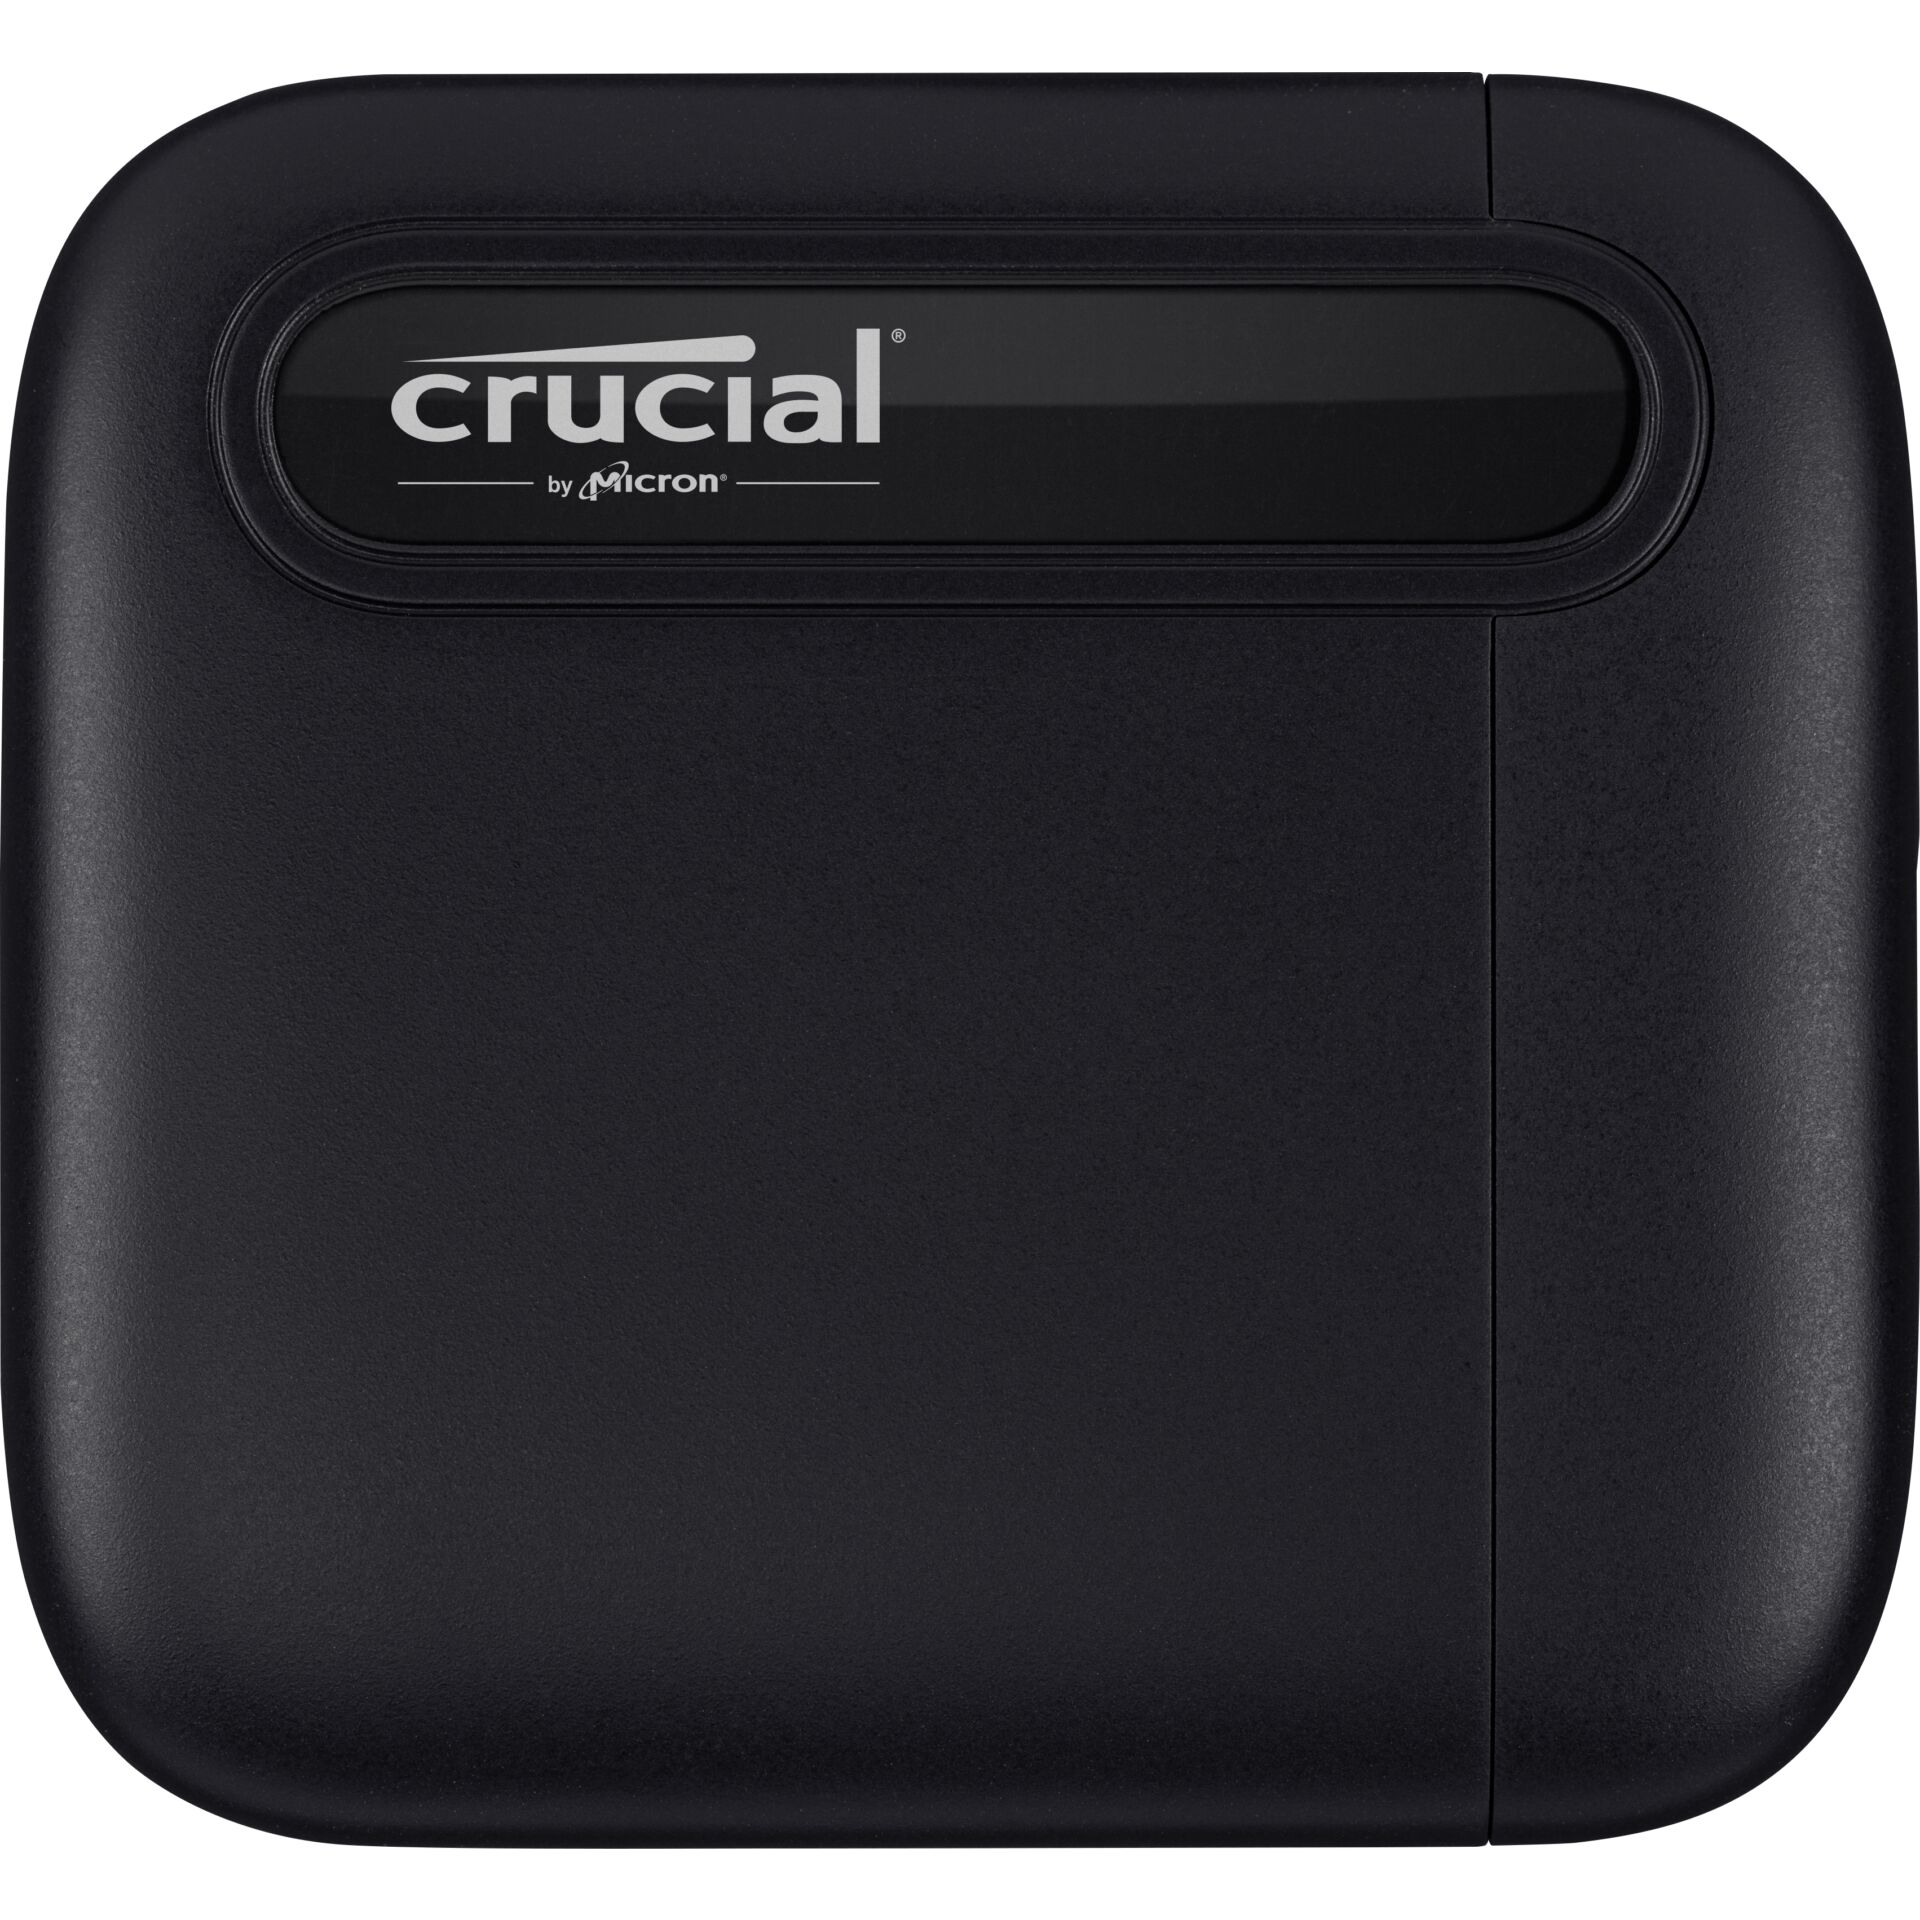 Crucial Portable X6 SSD 500GB USB 3.1 Gen 2 Type-C